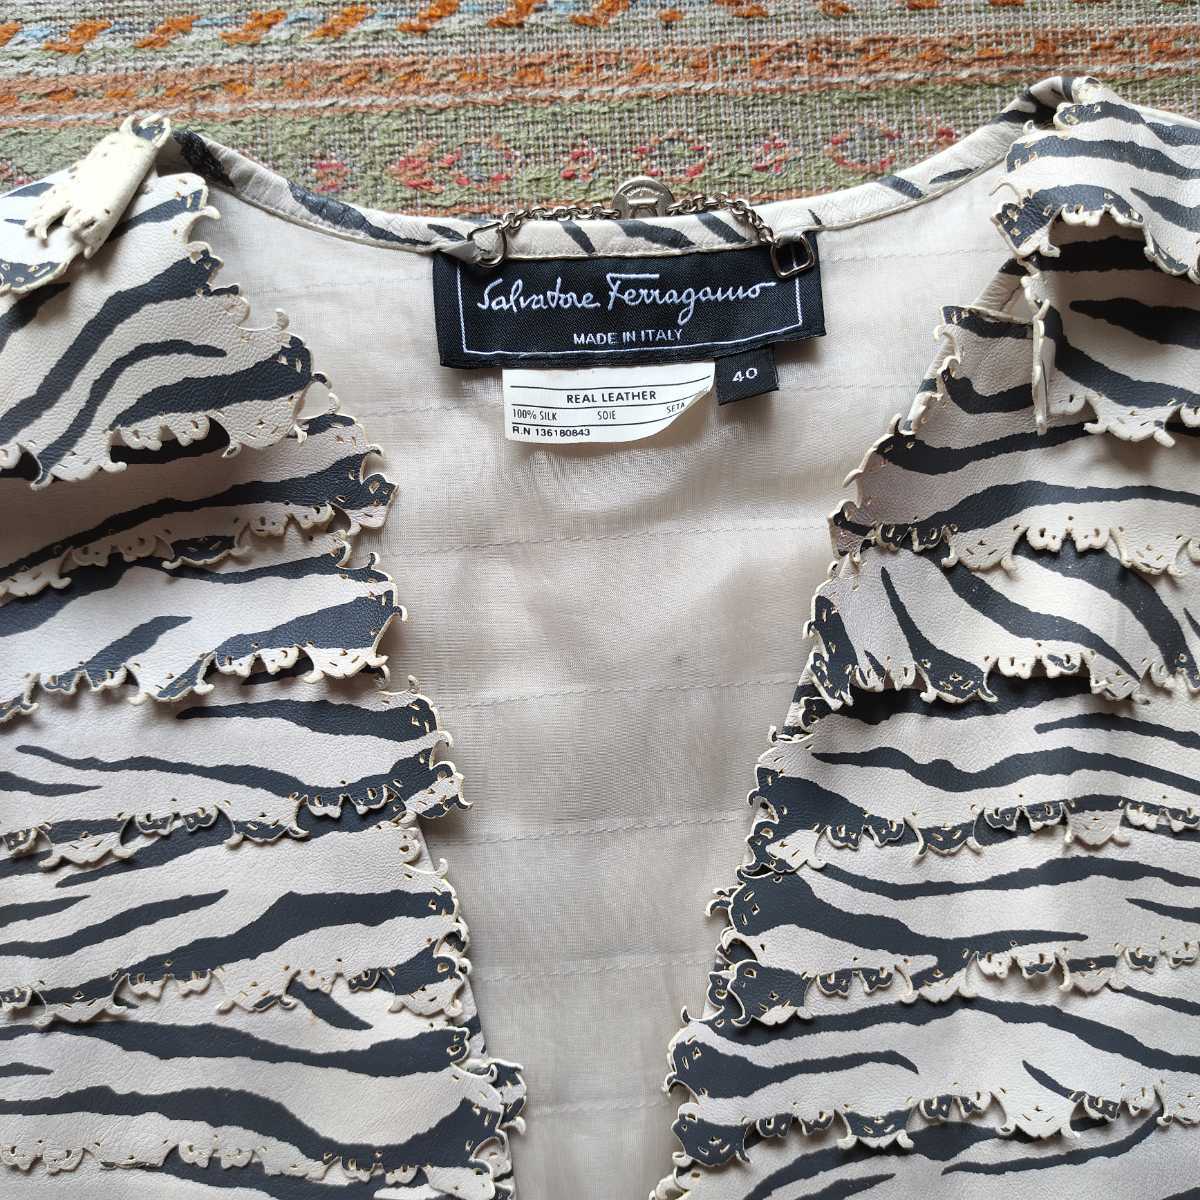  Ferragamo sheep leather made Zebra pattern short sleeves sho-to jacket 40(S) Italy made 